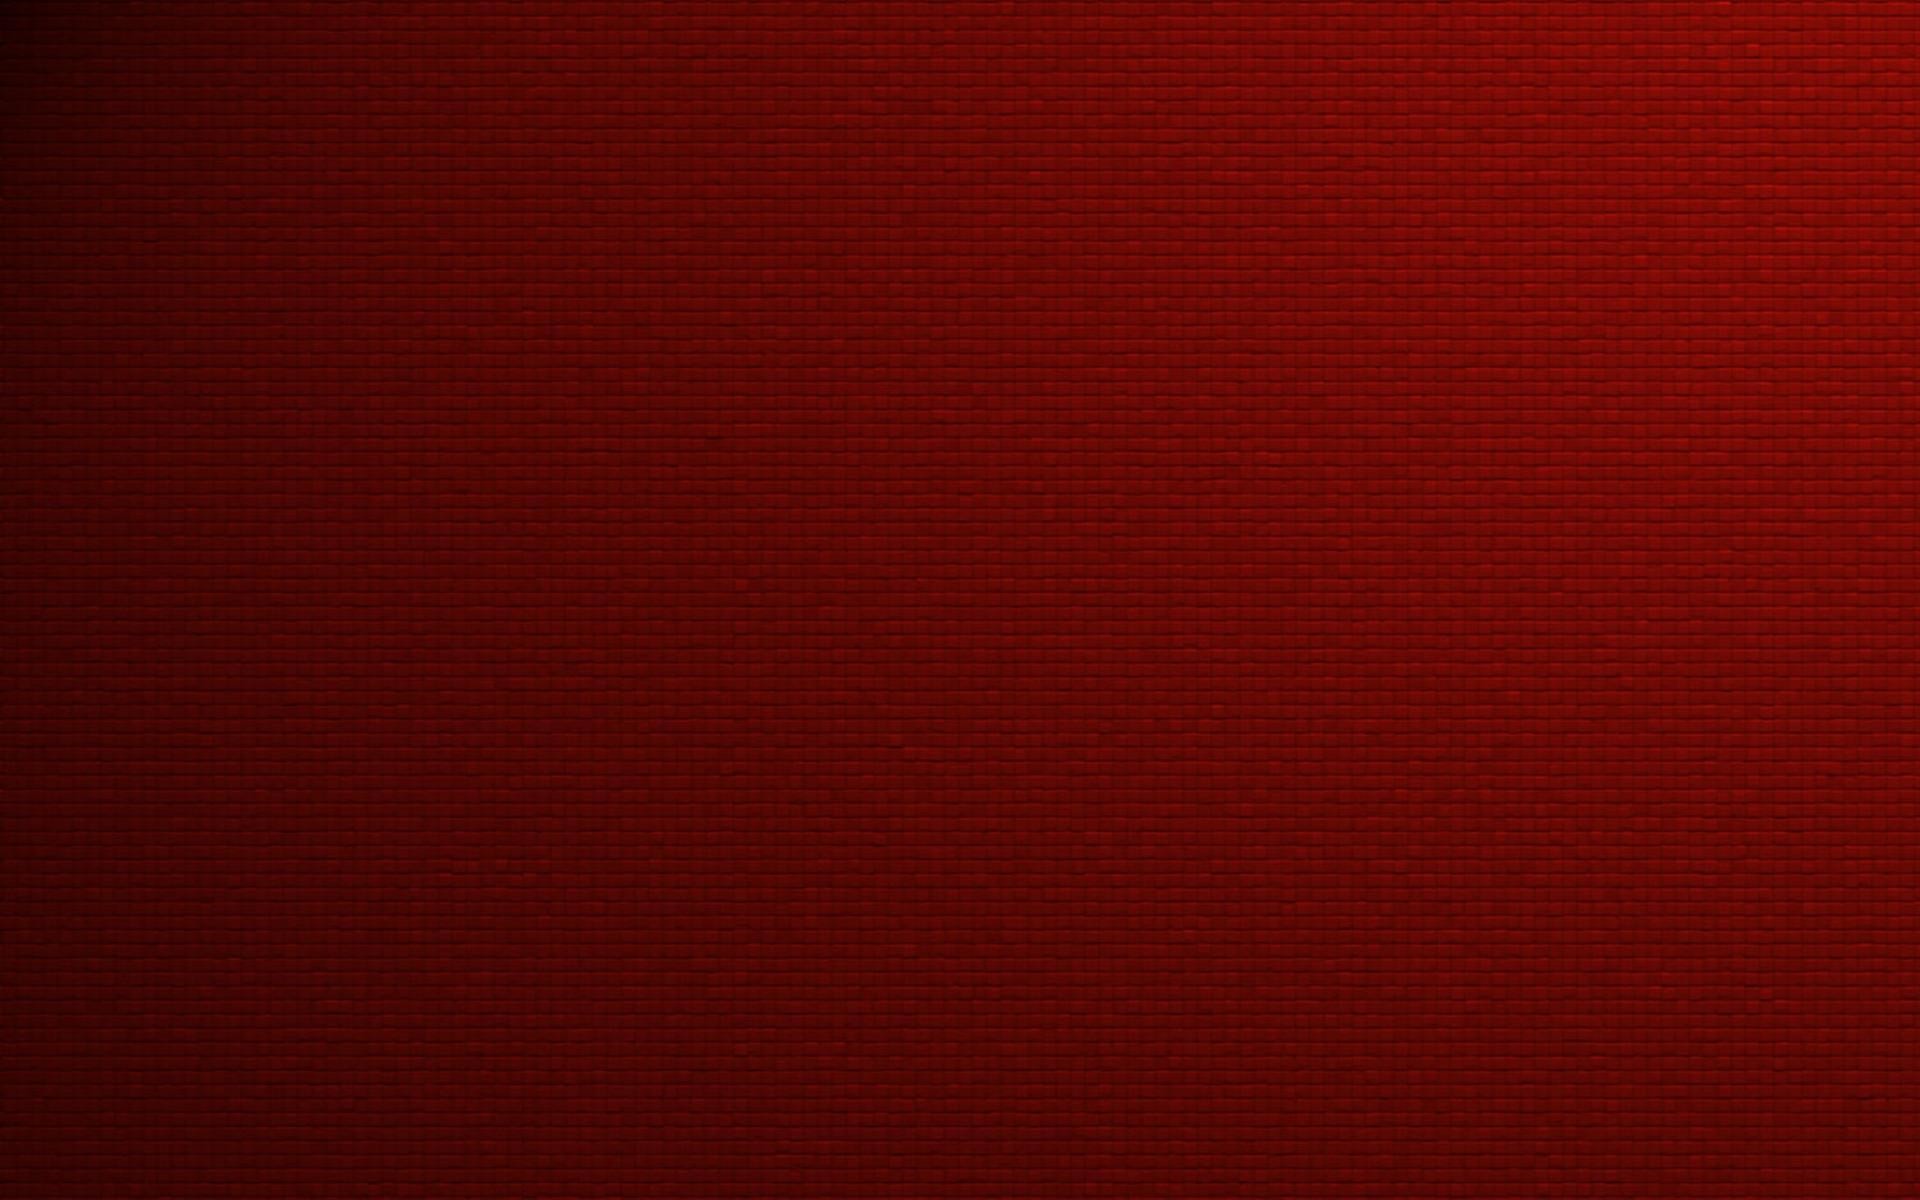 1920x1200 Space Desktop Backgrounds Hd Red Star Wallpaper 1680x1050PX .